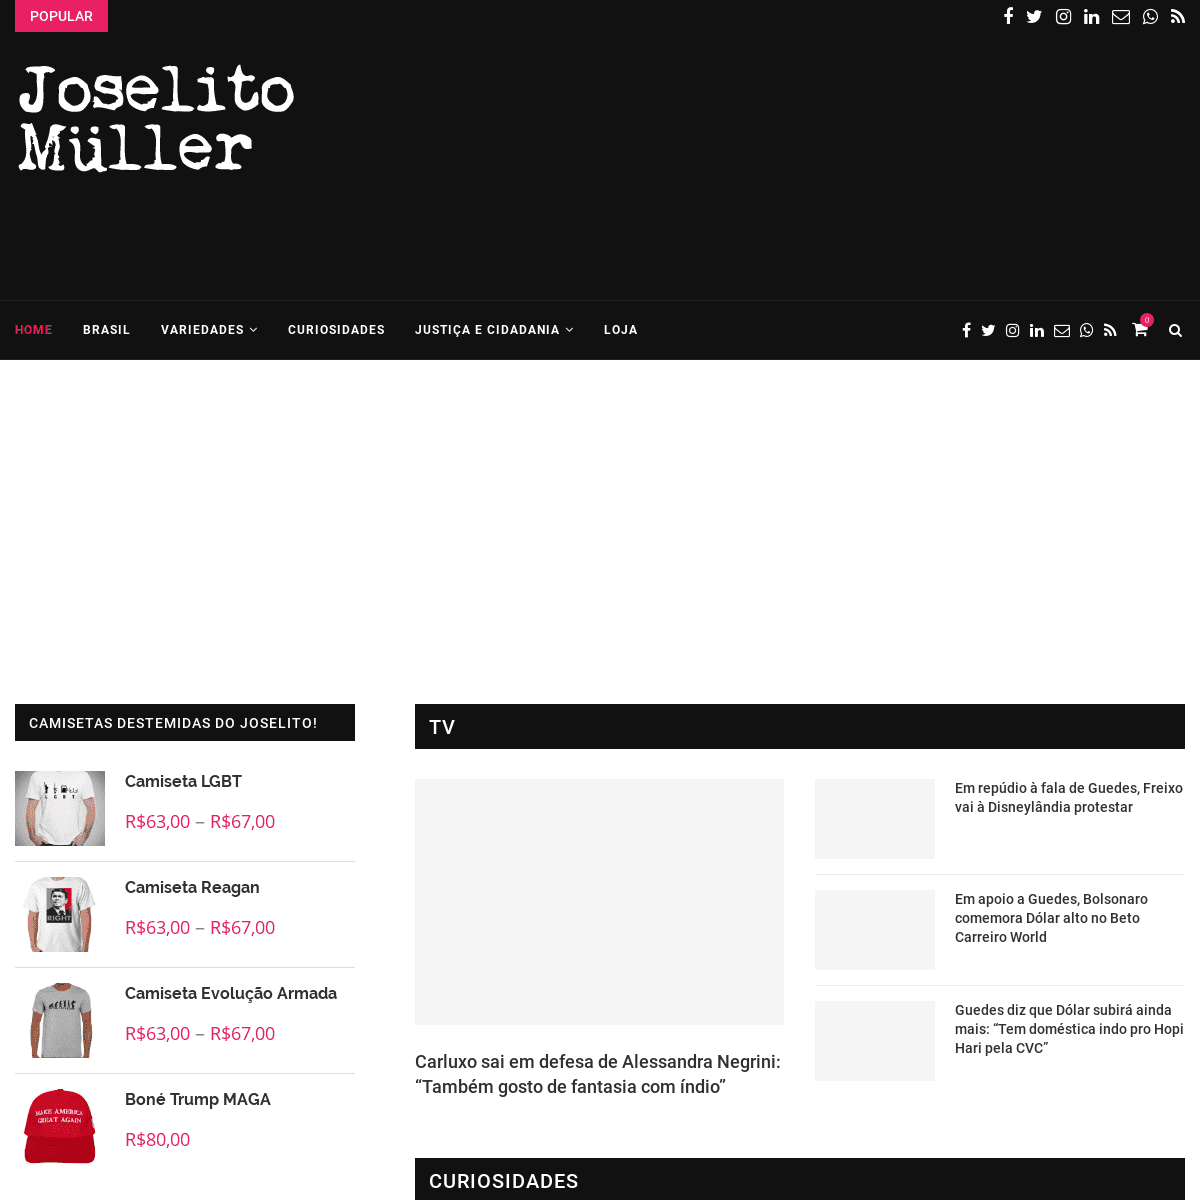 A complete backup of joselitomuller.com